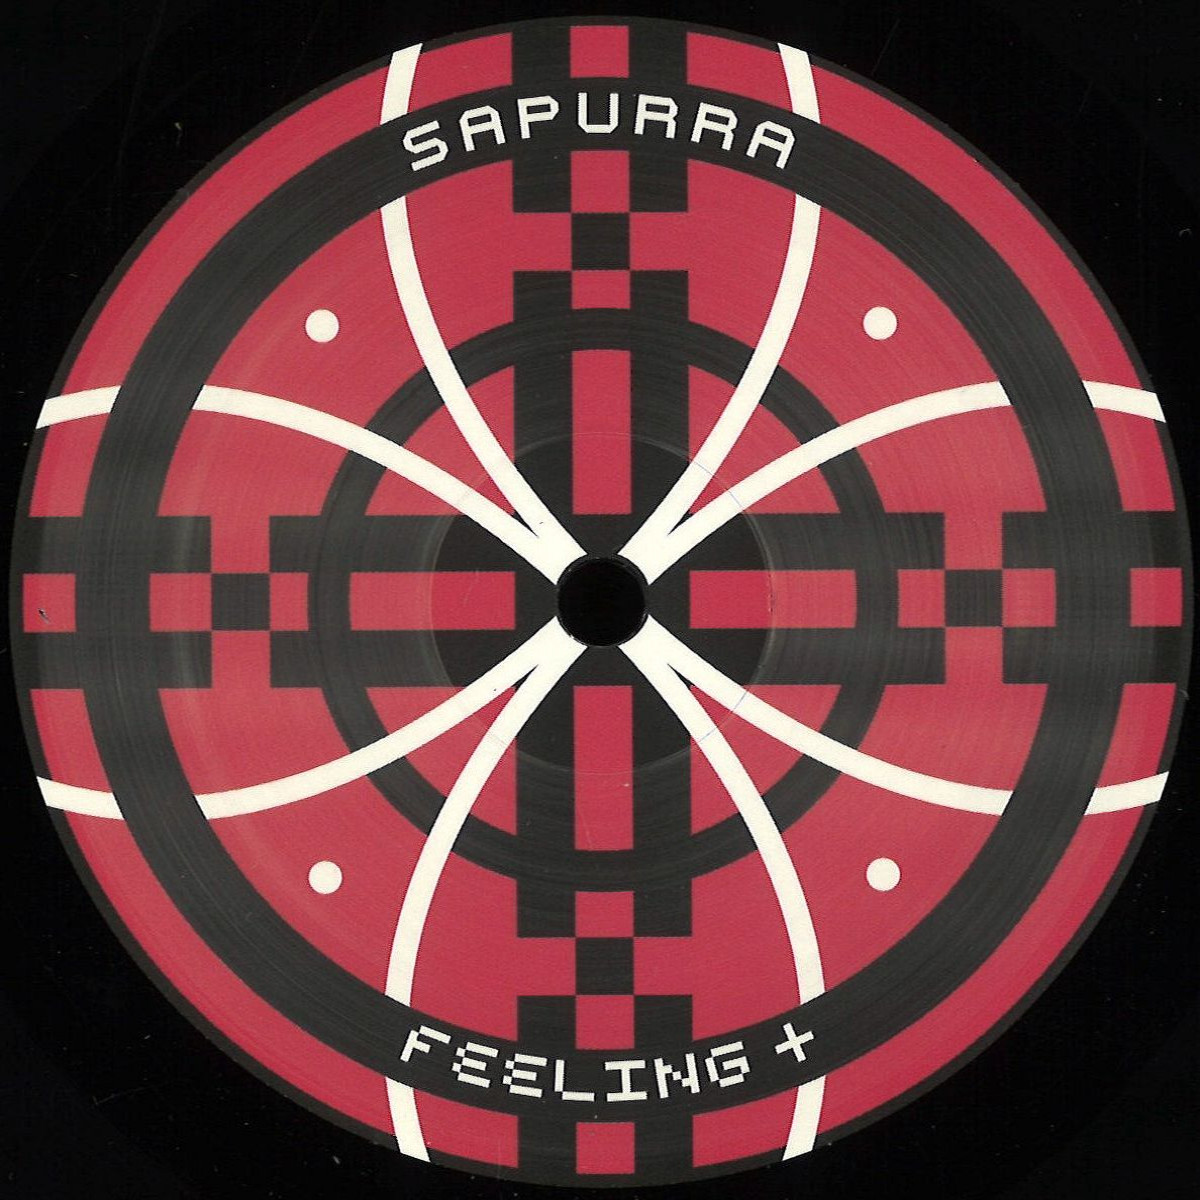 Sapurra - Feeling+ [ARR040]